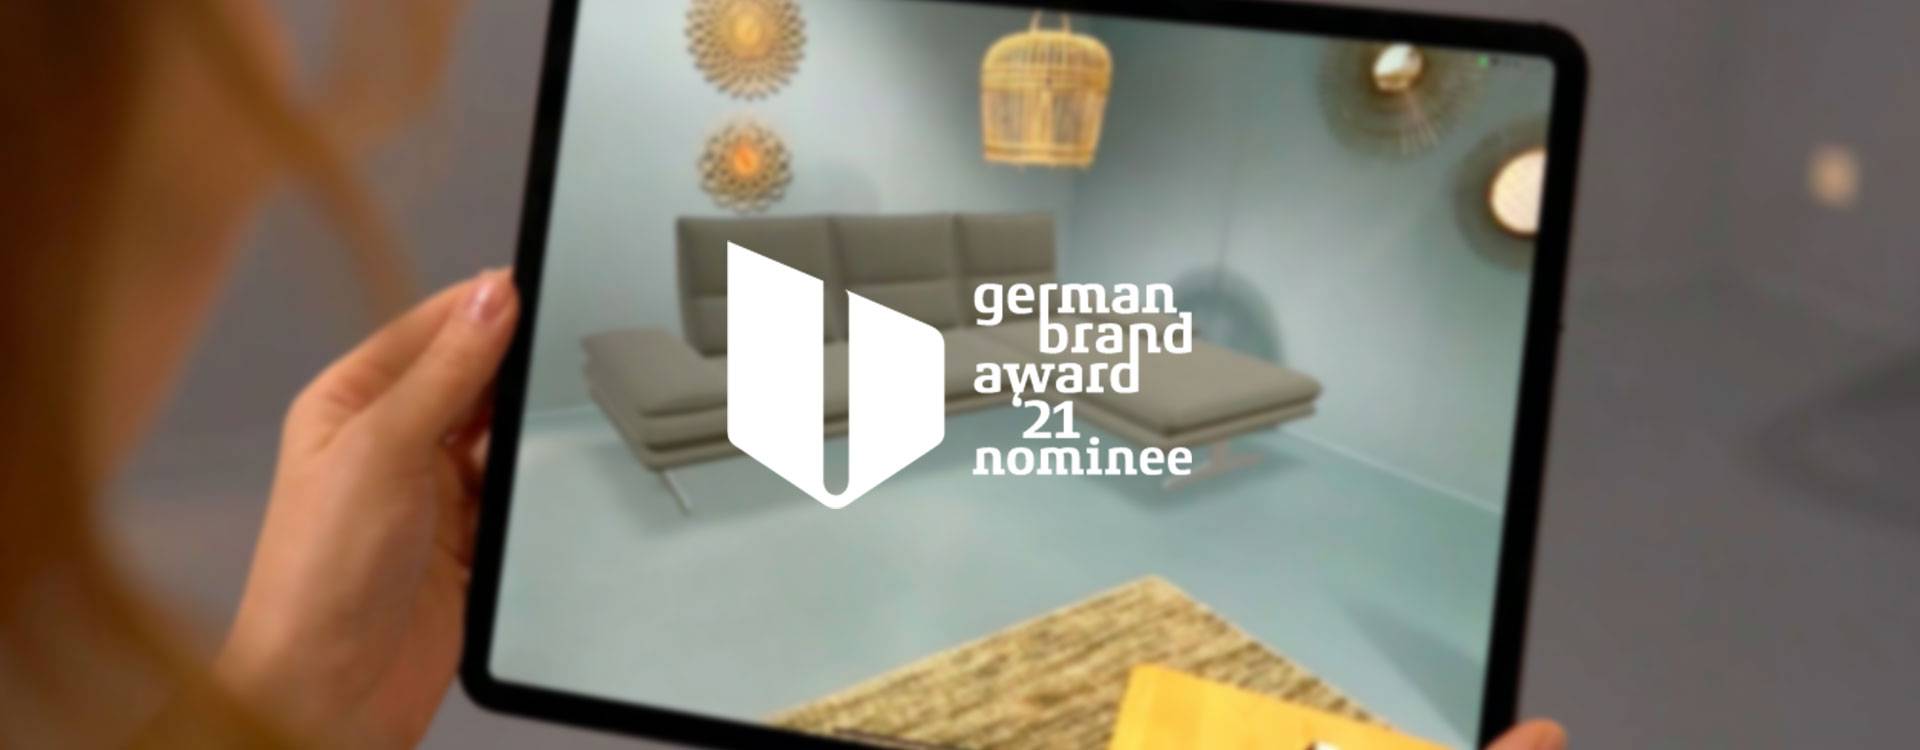 German Brand Award 2021 nominee